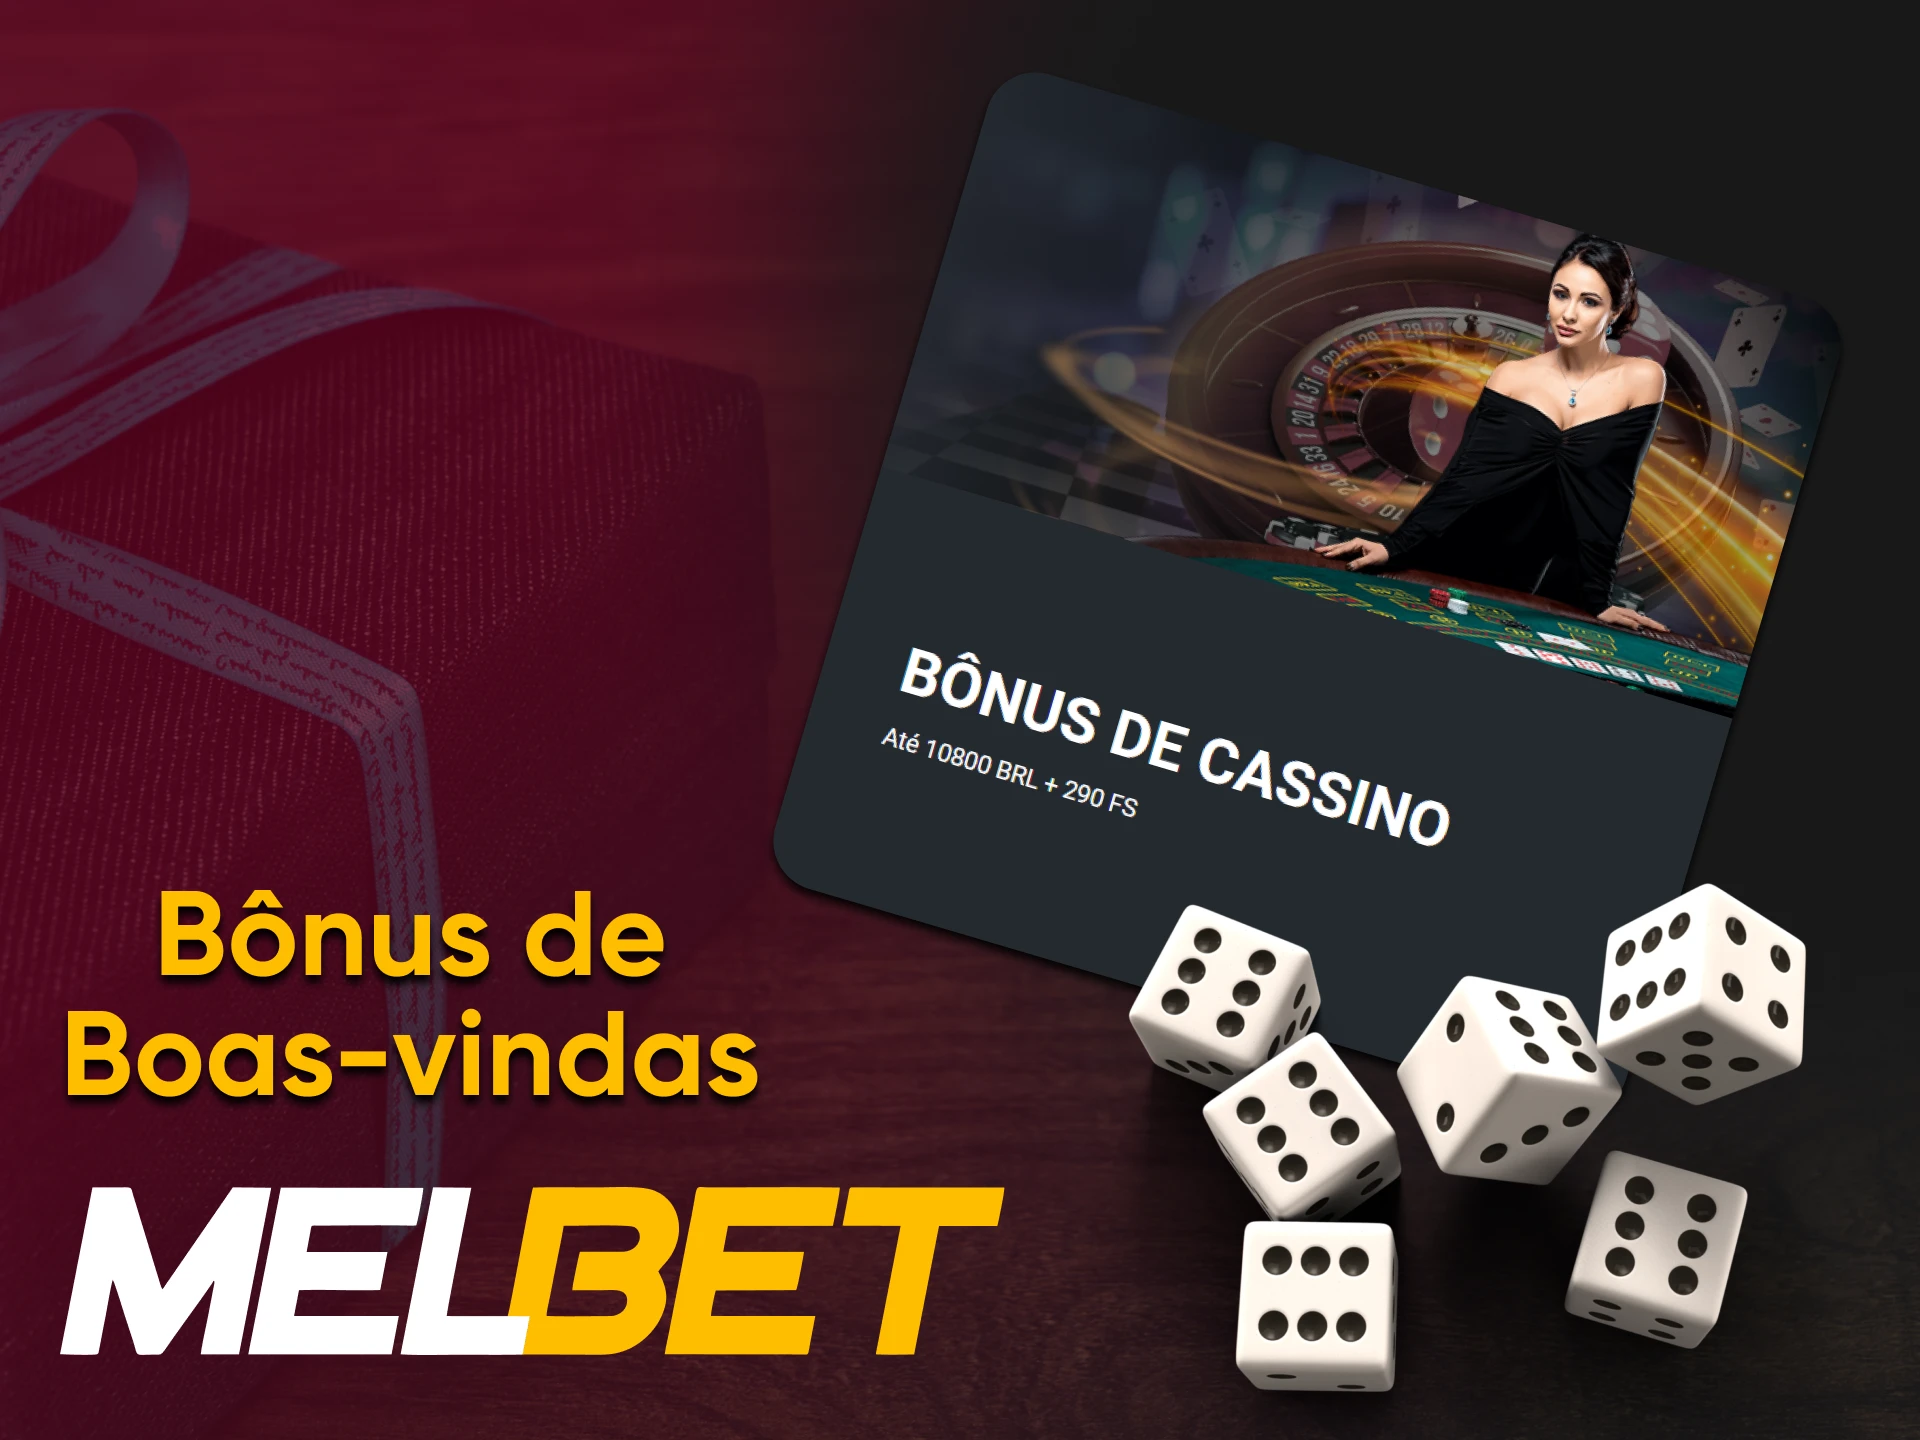 To receive the Melbet casino bonus, make a deposit.